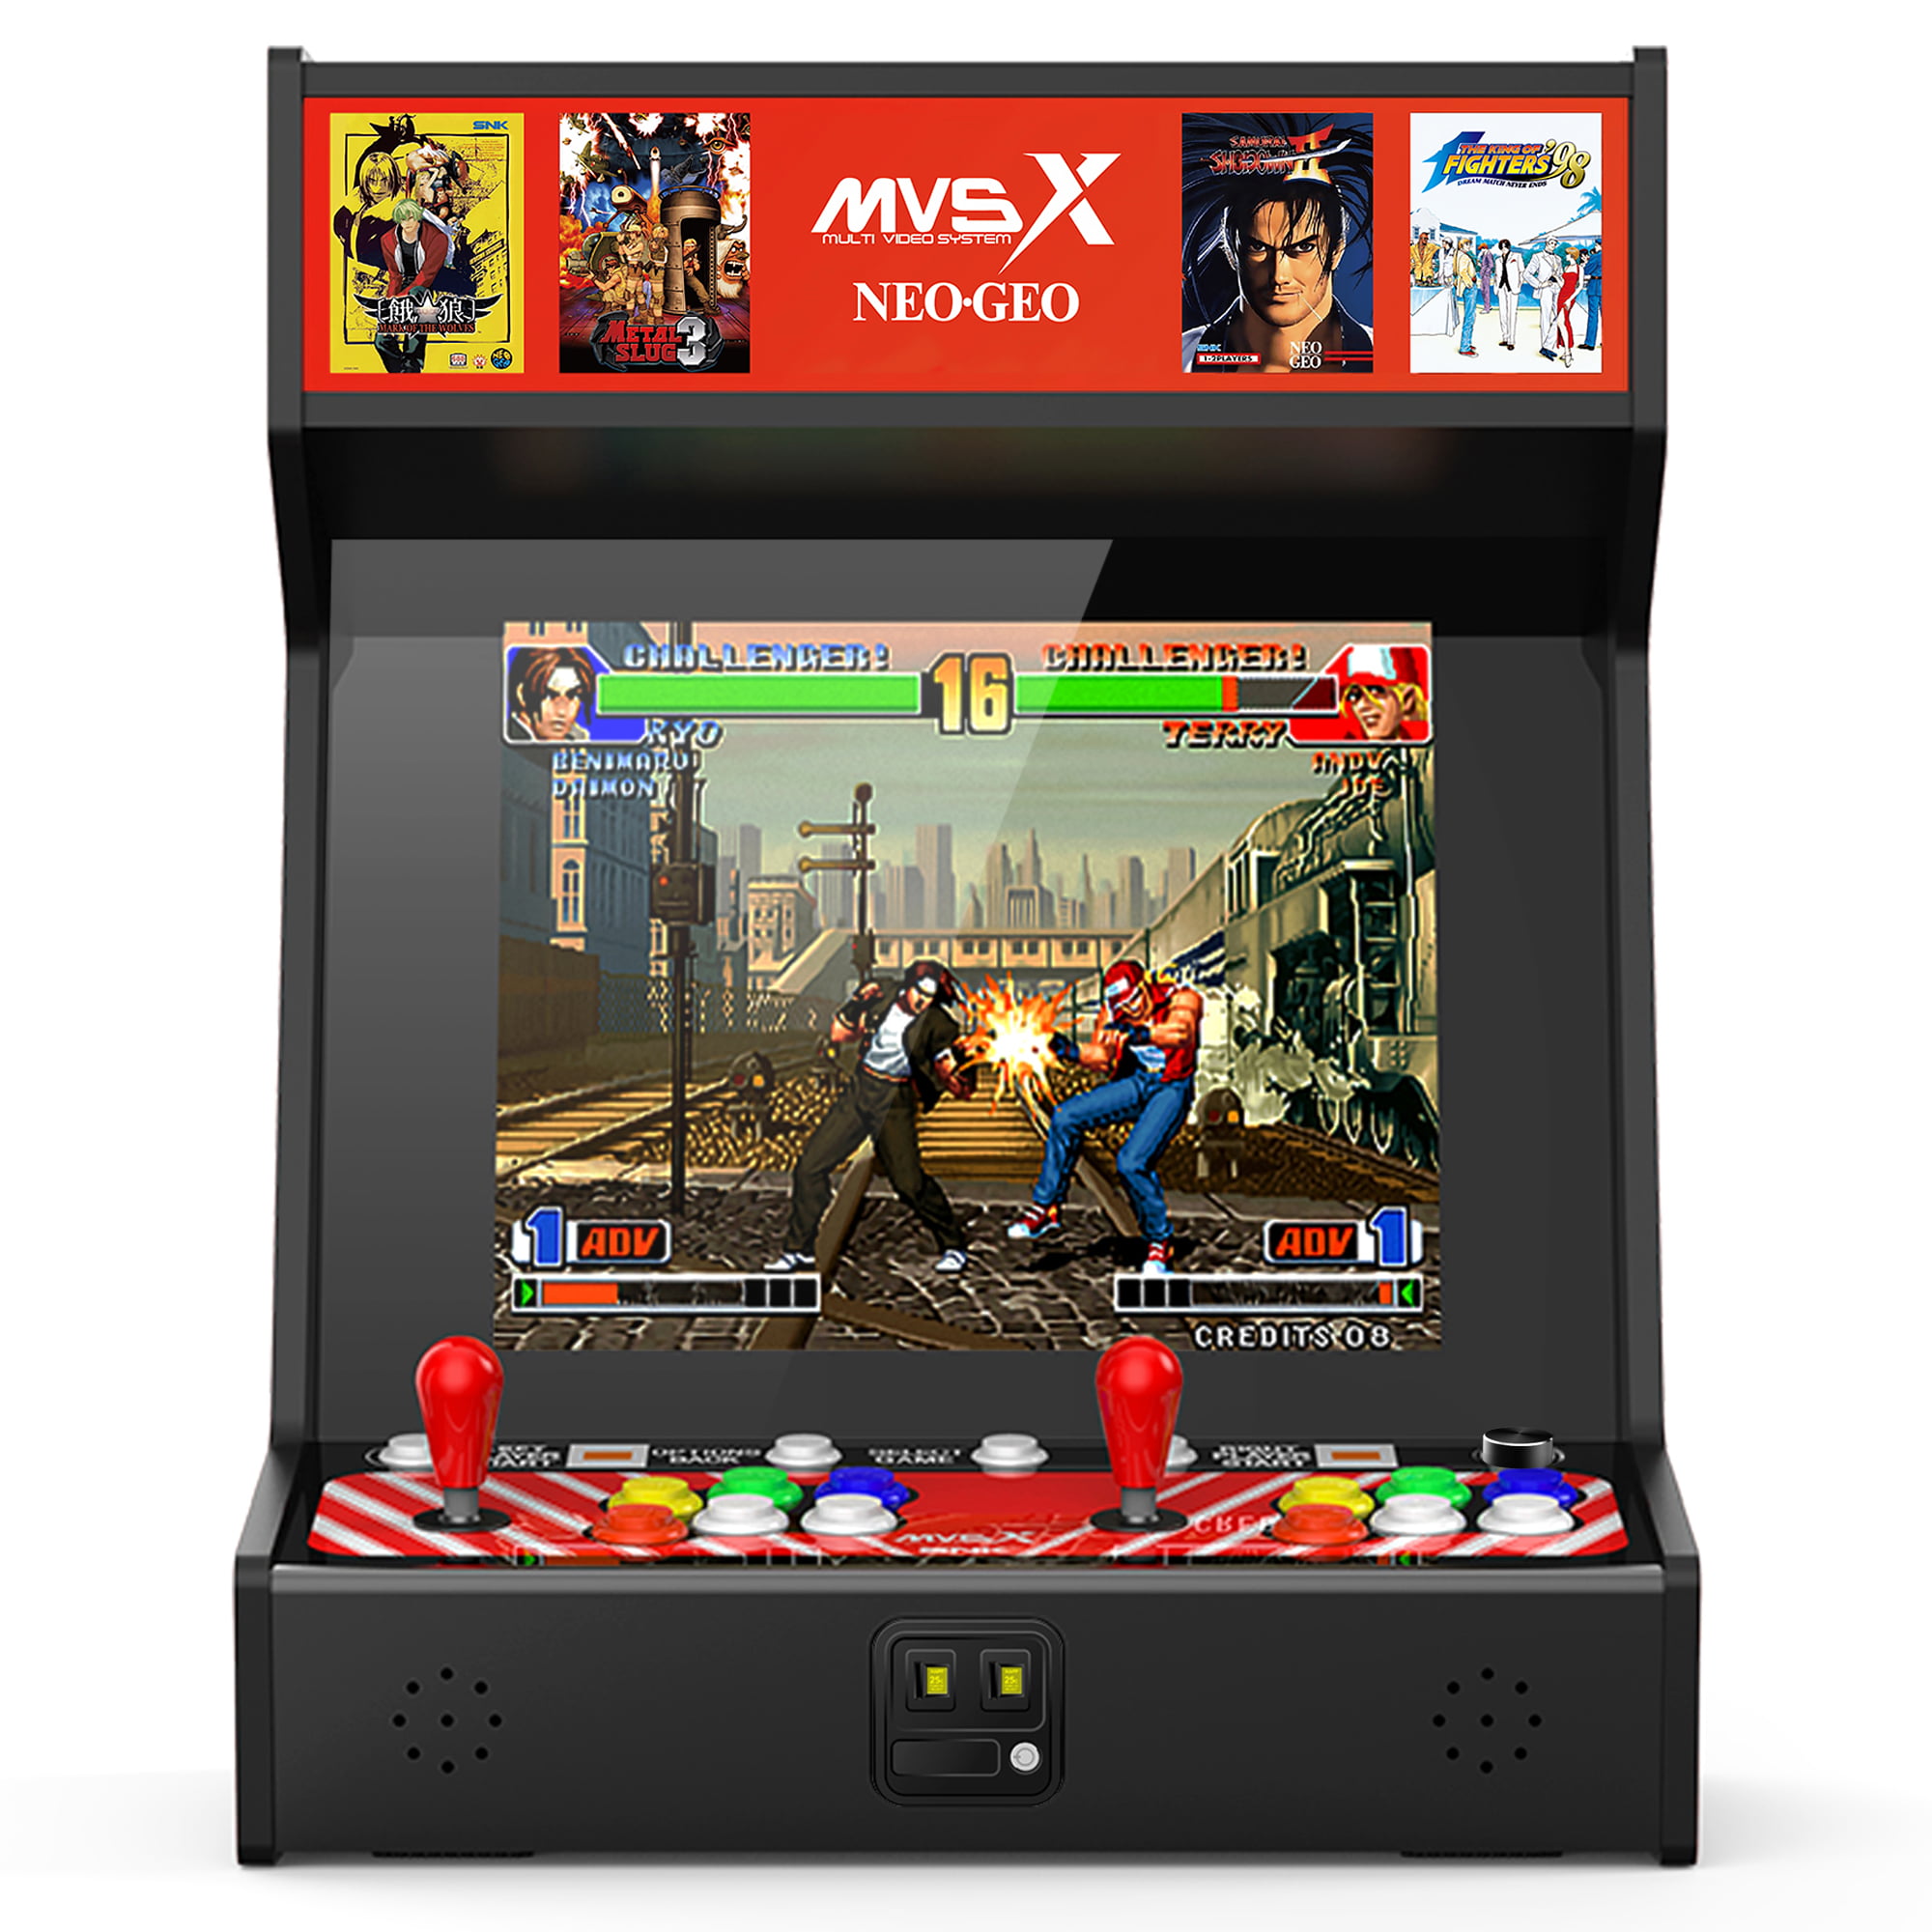 NEOGEO MVSX Home Entertainment Arcade with 50 SNK Classic Games